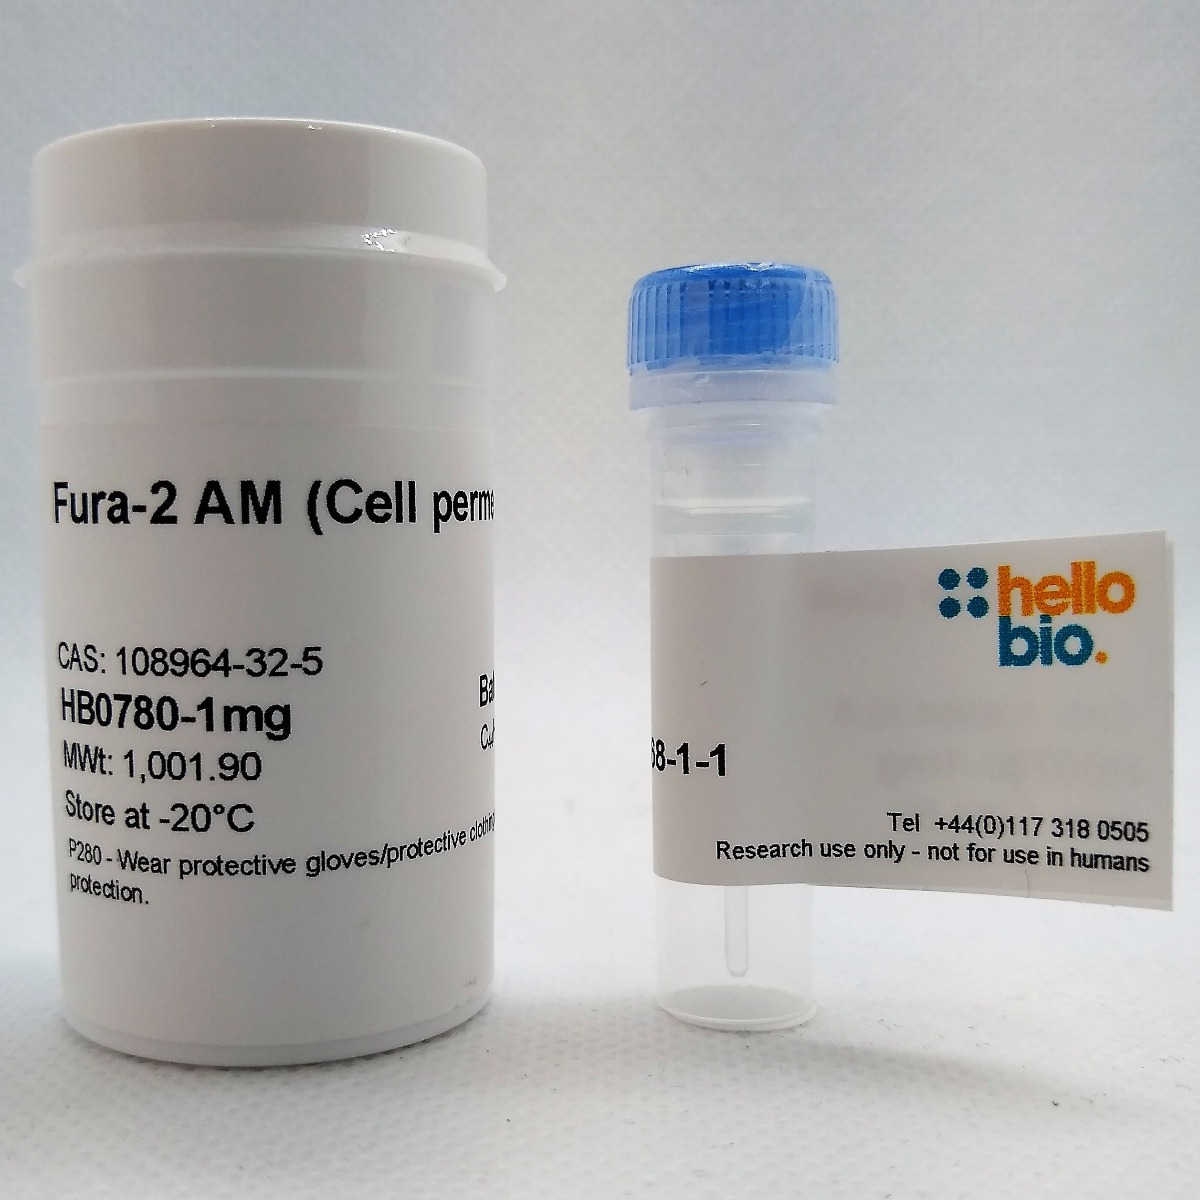 Fura-2 AM (Cell permeant) product vial image | Hello Bio